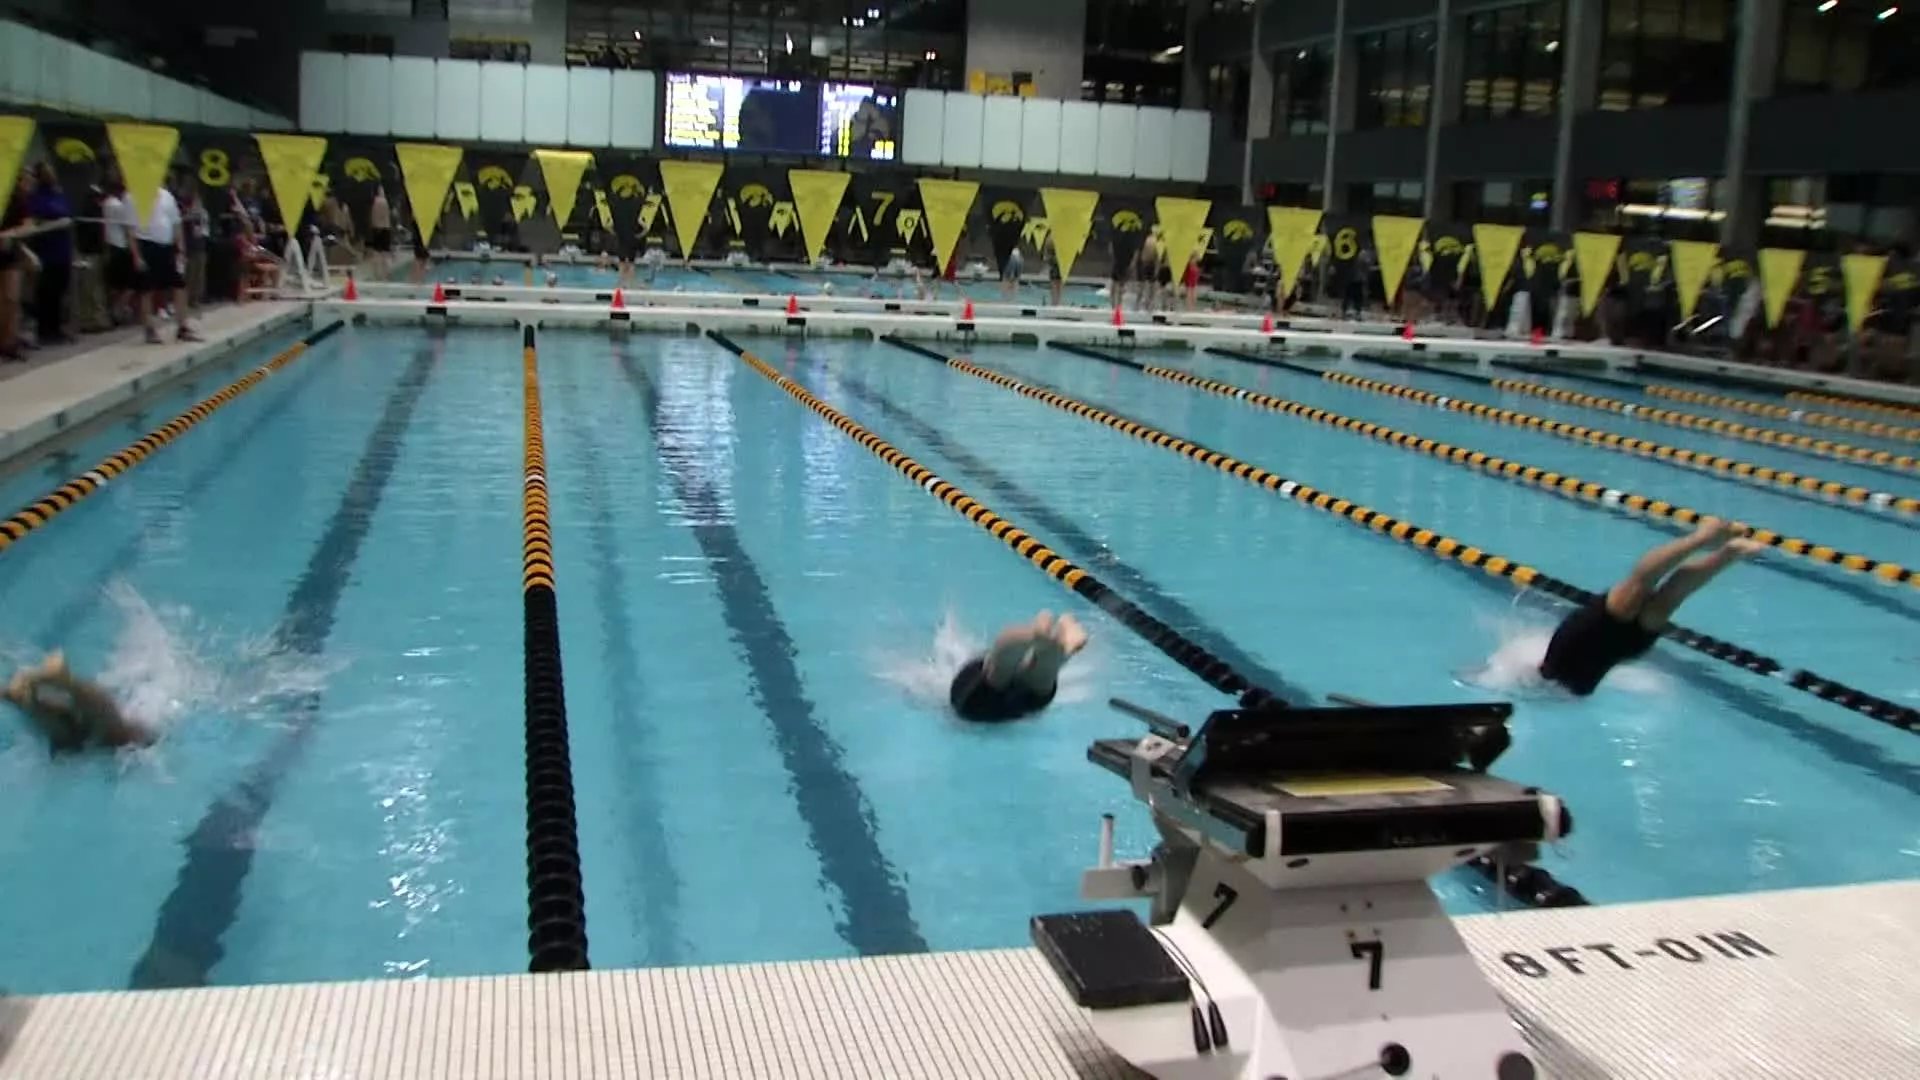 University of Alberta Aquatic Centre in Canada, North America | Swimming - Rated 0.8